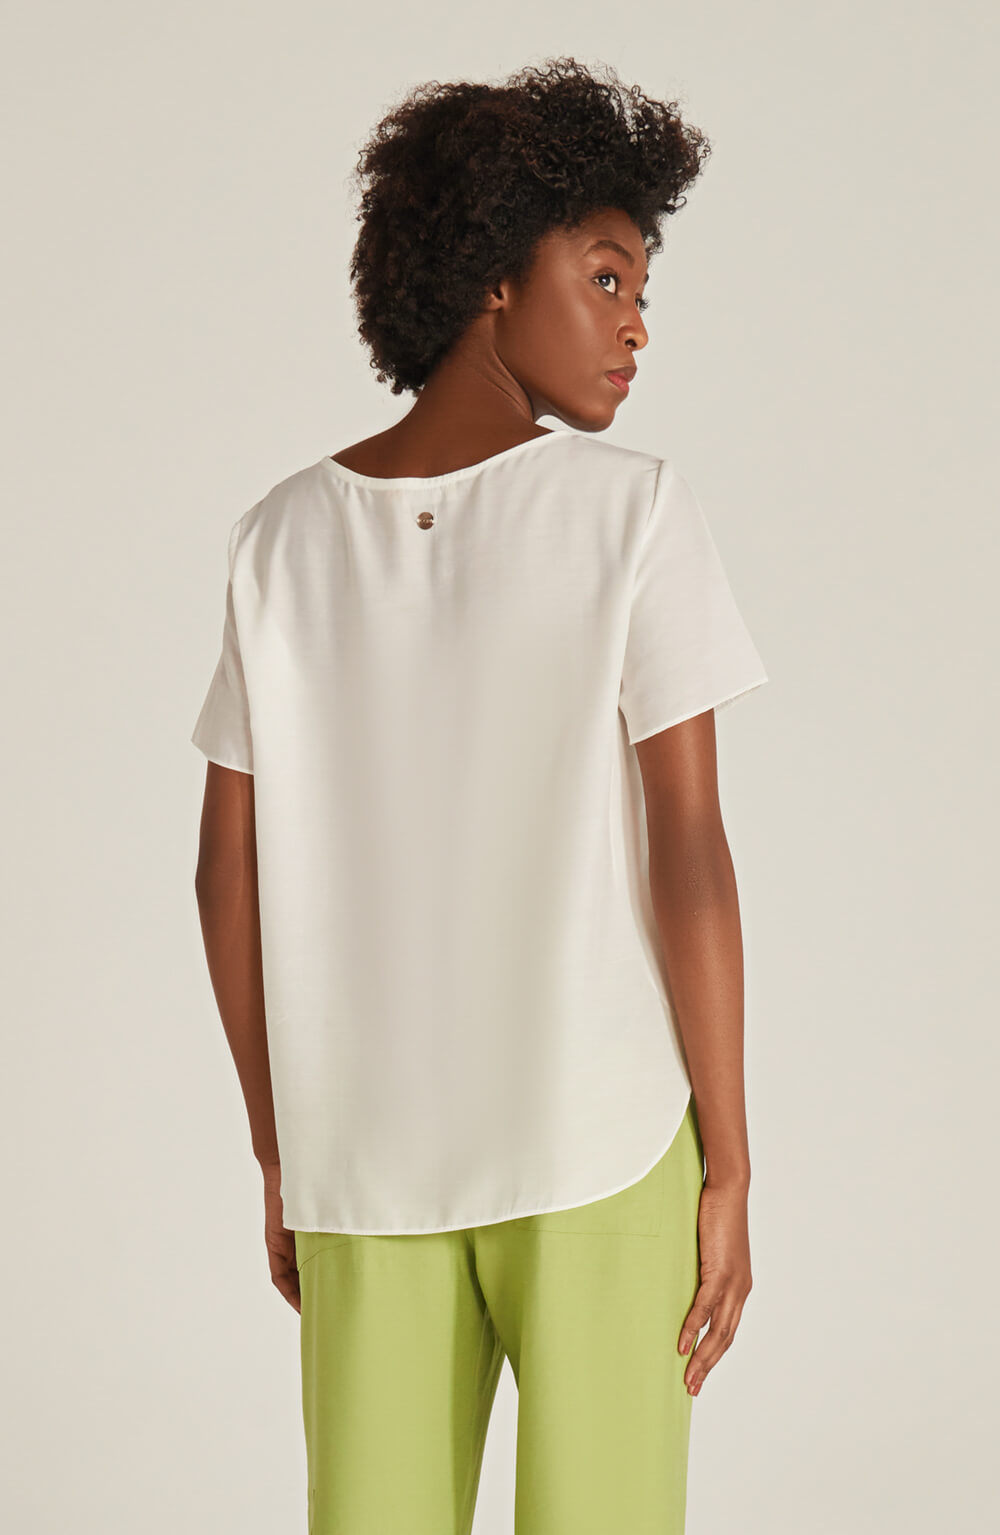 Blusa decote redondo manga curta com transpasse lateral off white